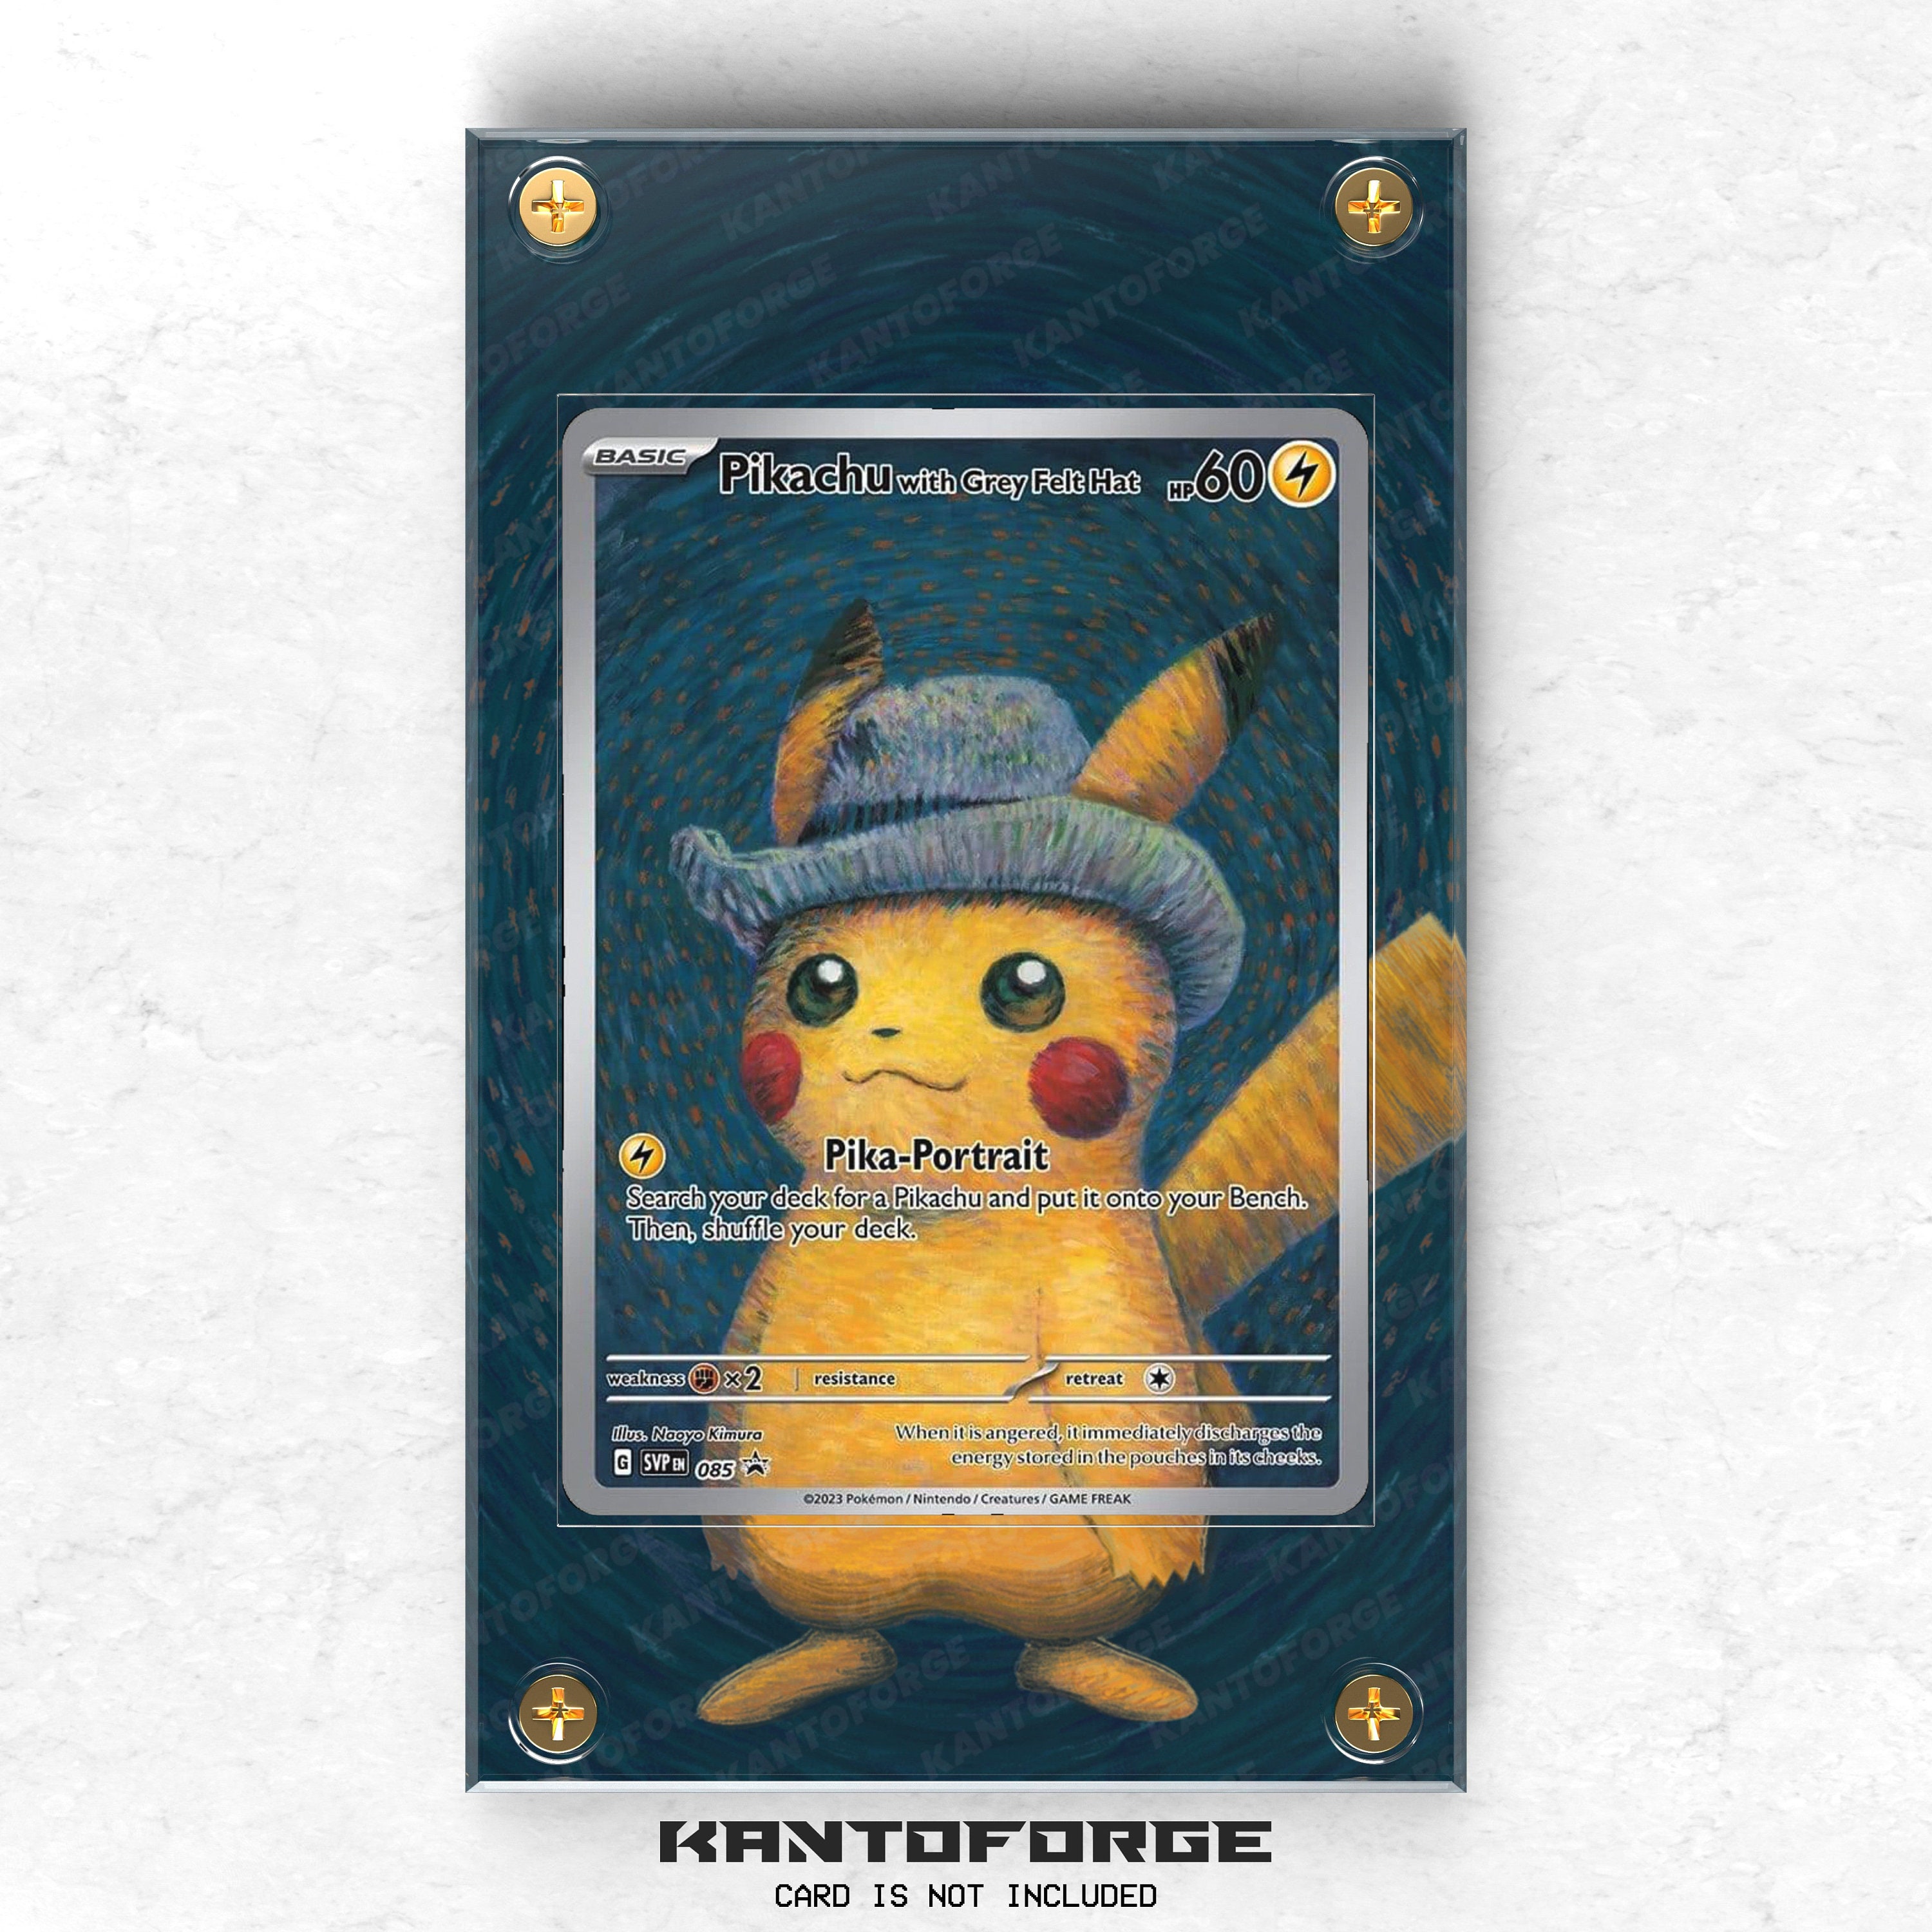 Pikachu With Grey Felt Hat SVP 085 Alternate Art Custom -  Israel